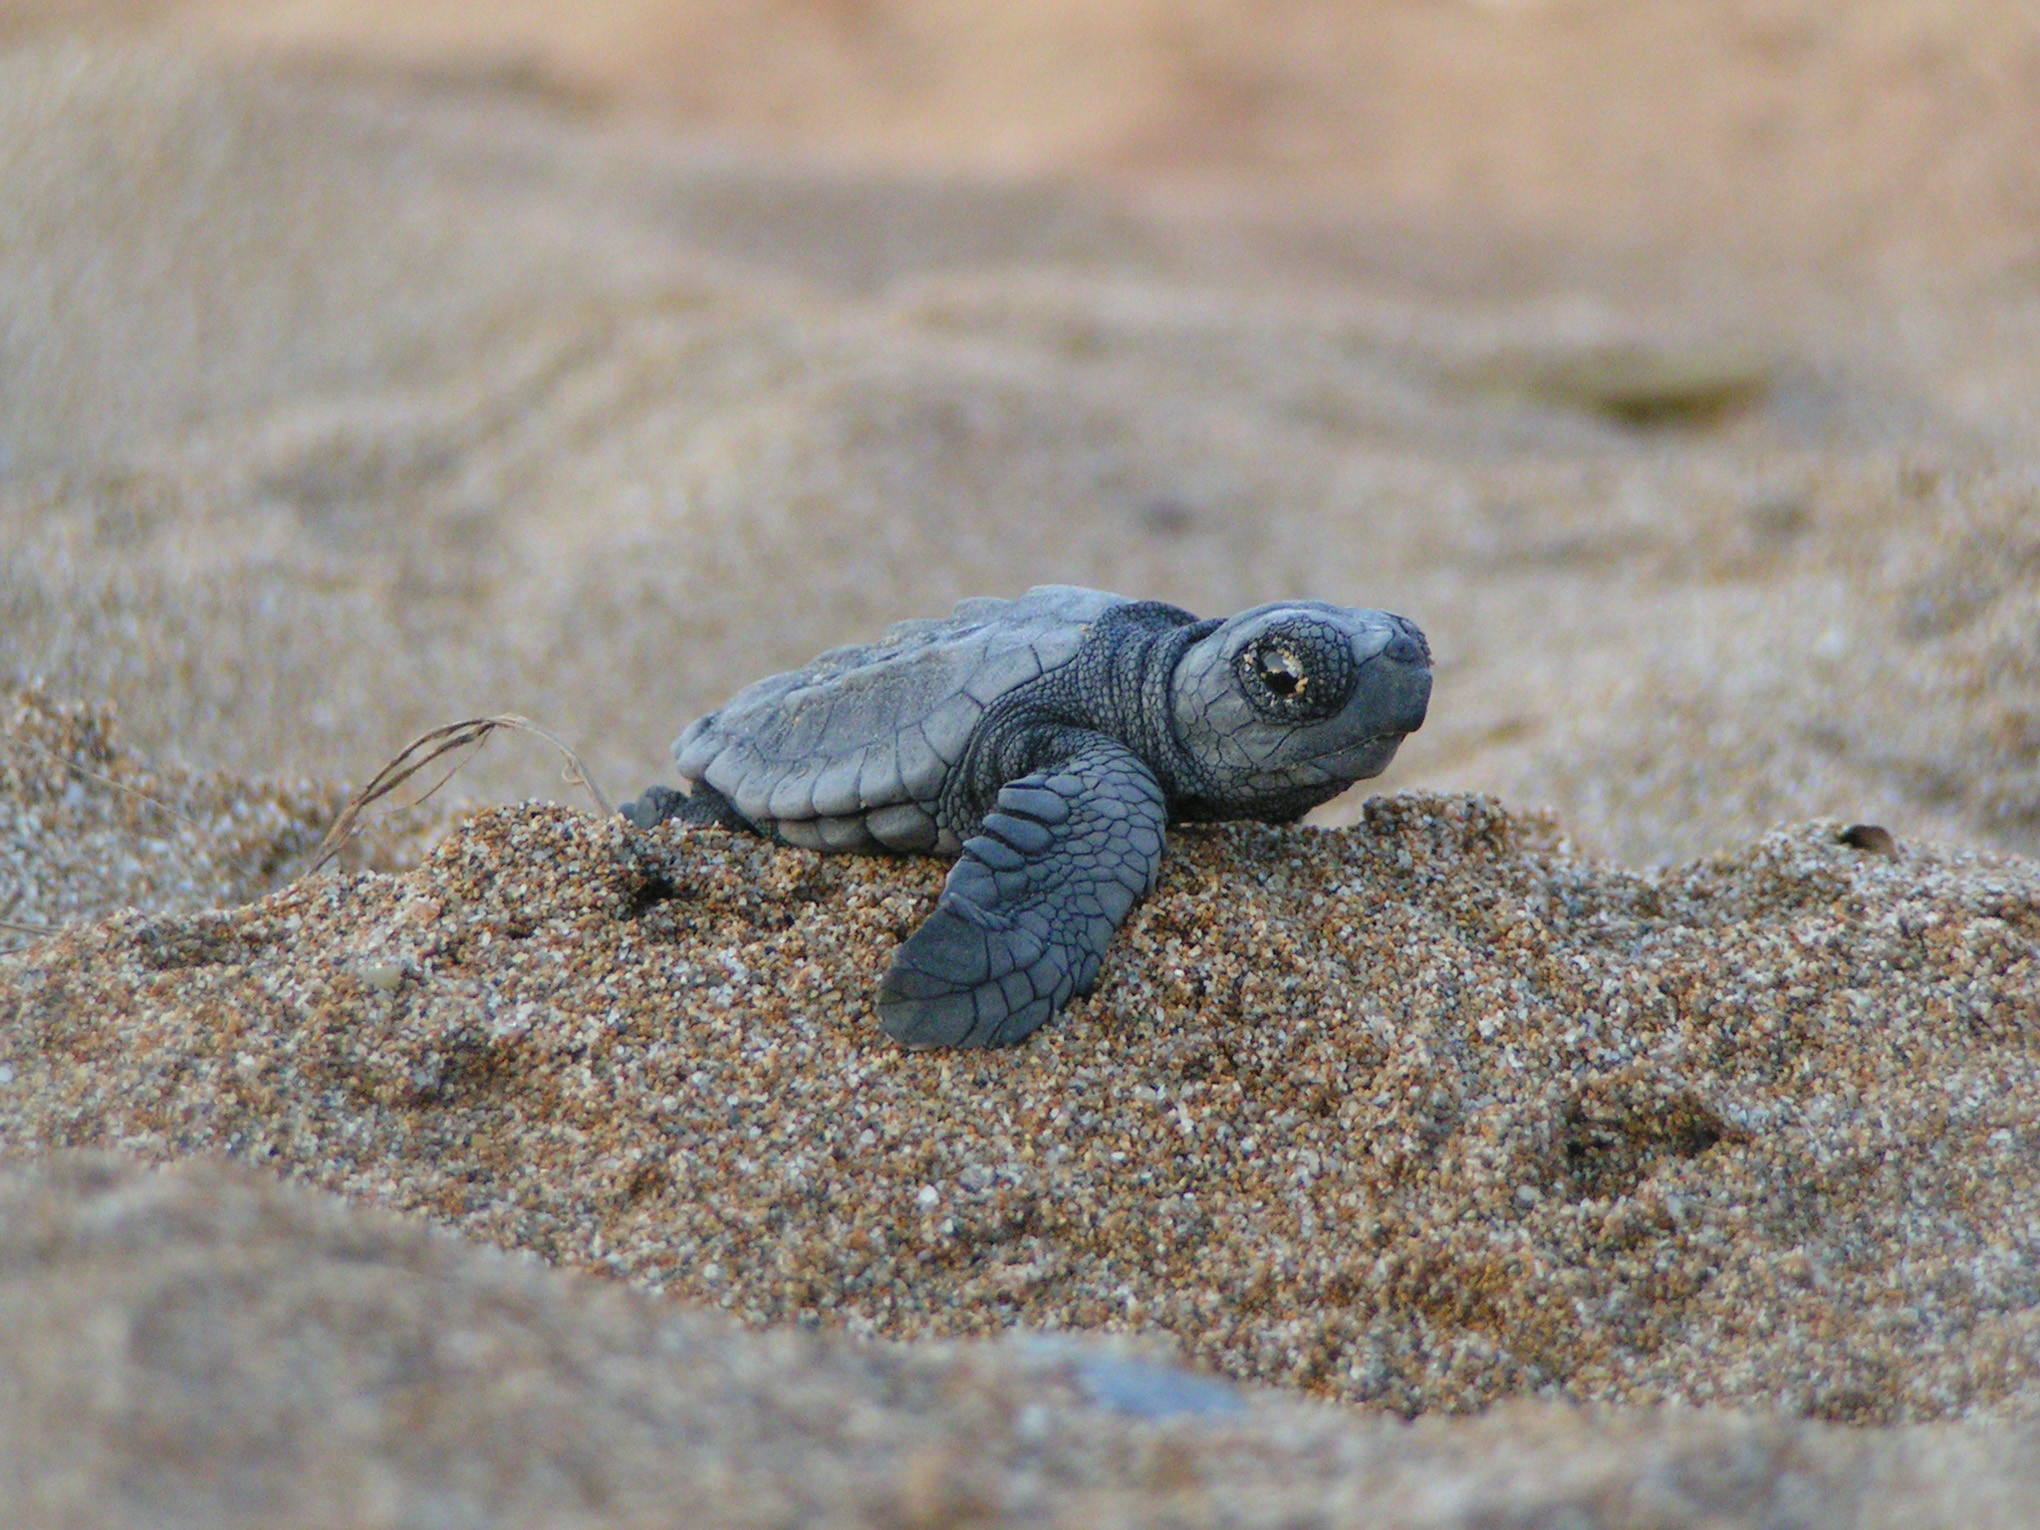 2040x1530 I wanna sea baby sea turtles hatch on a beach one day